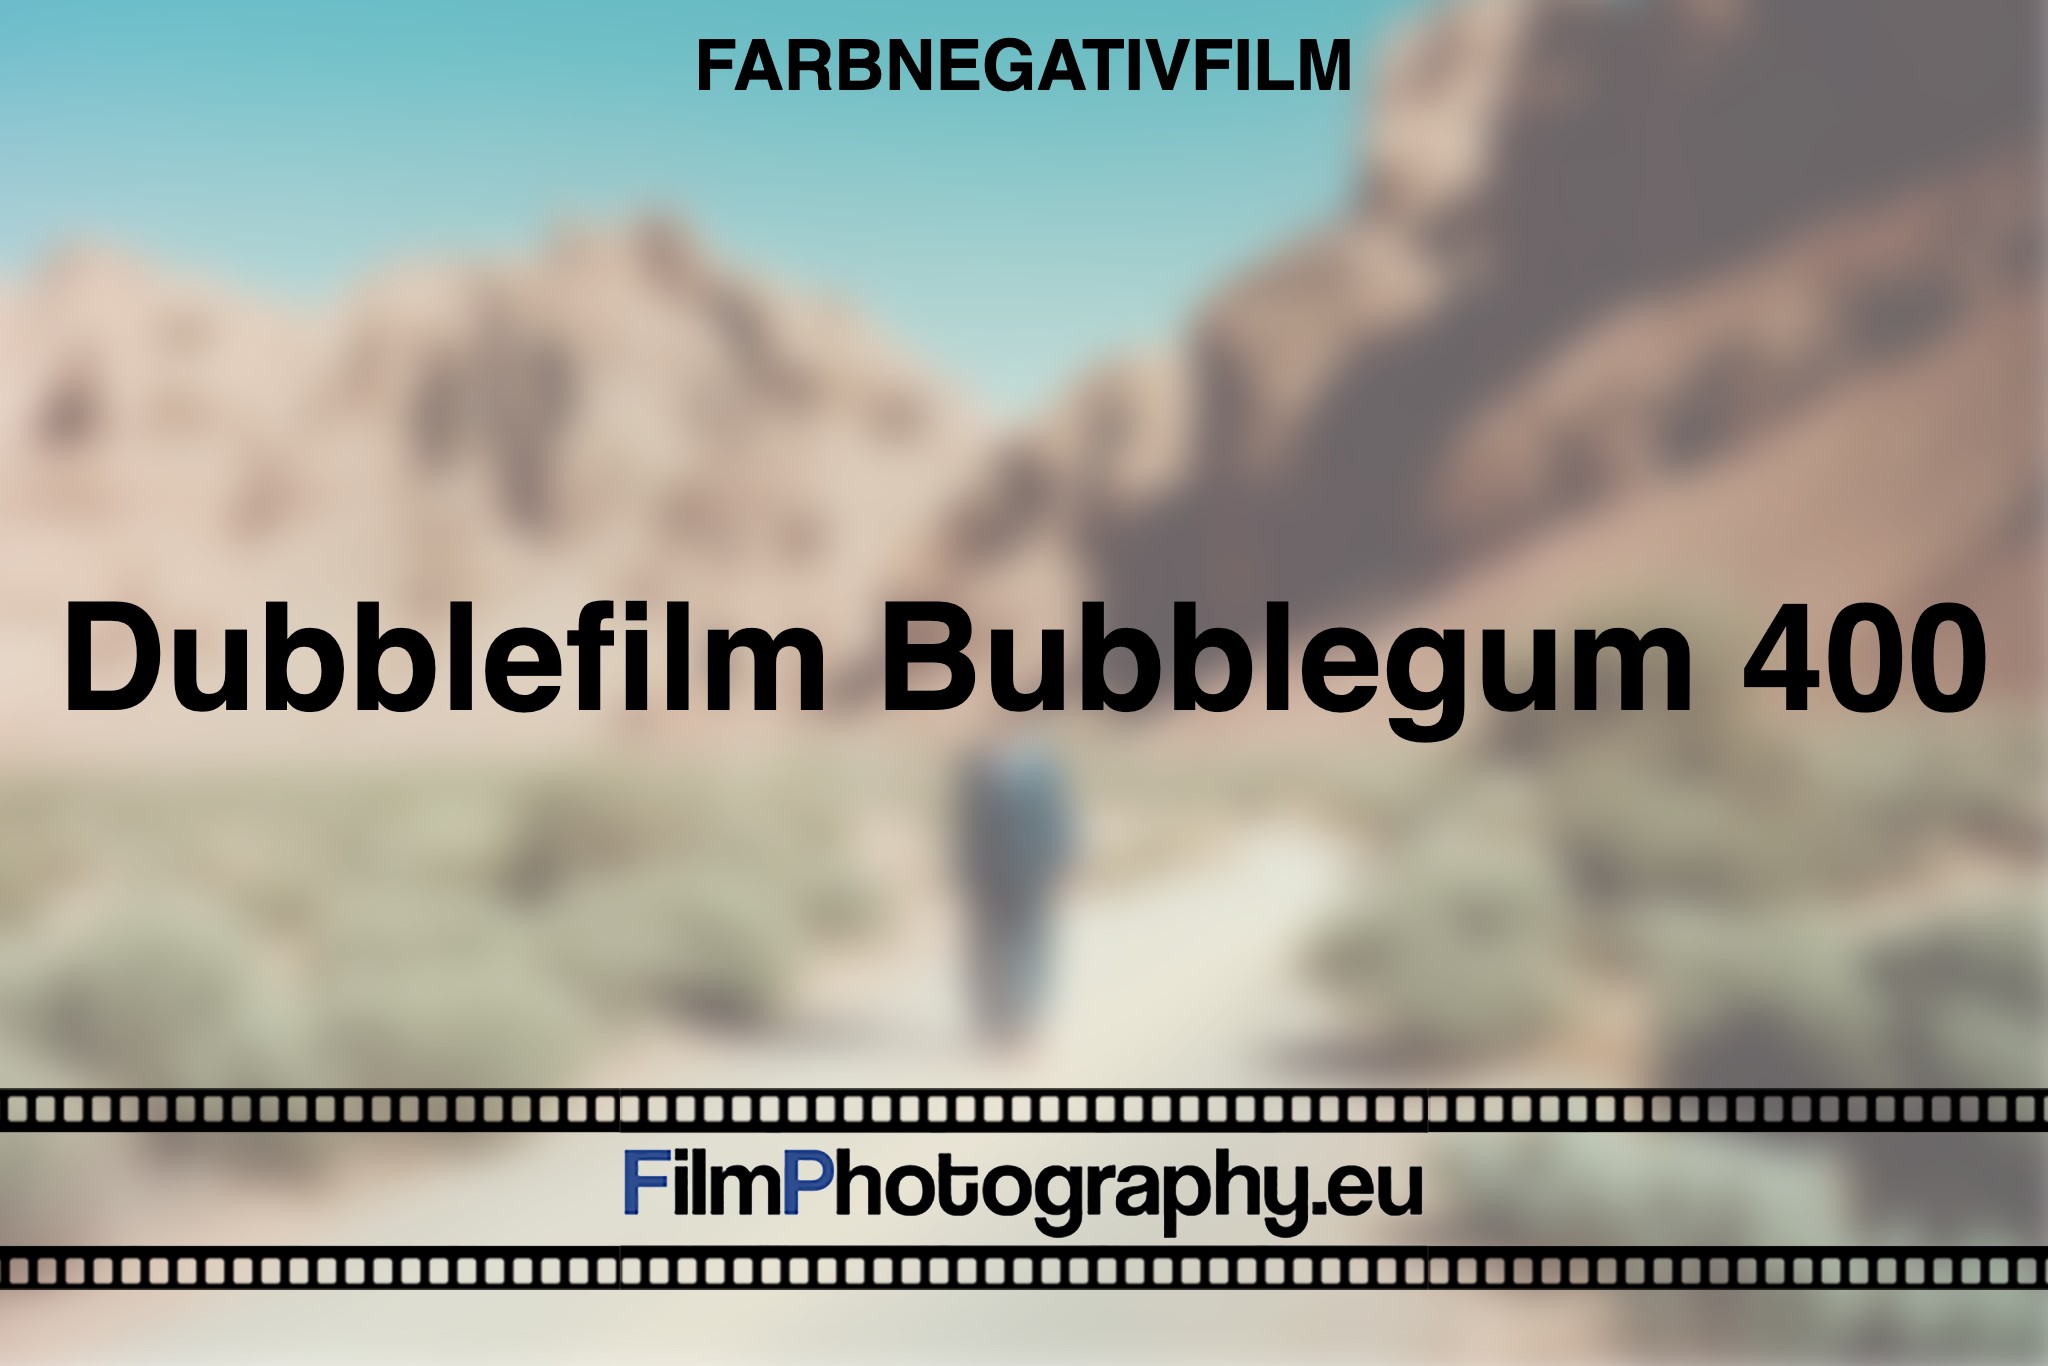 dubblefilm-bubblegum-400-farbnegativfilm-bnv